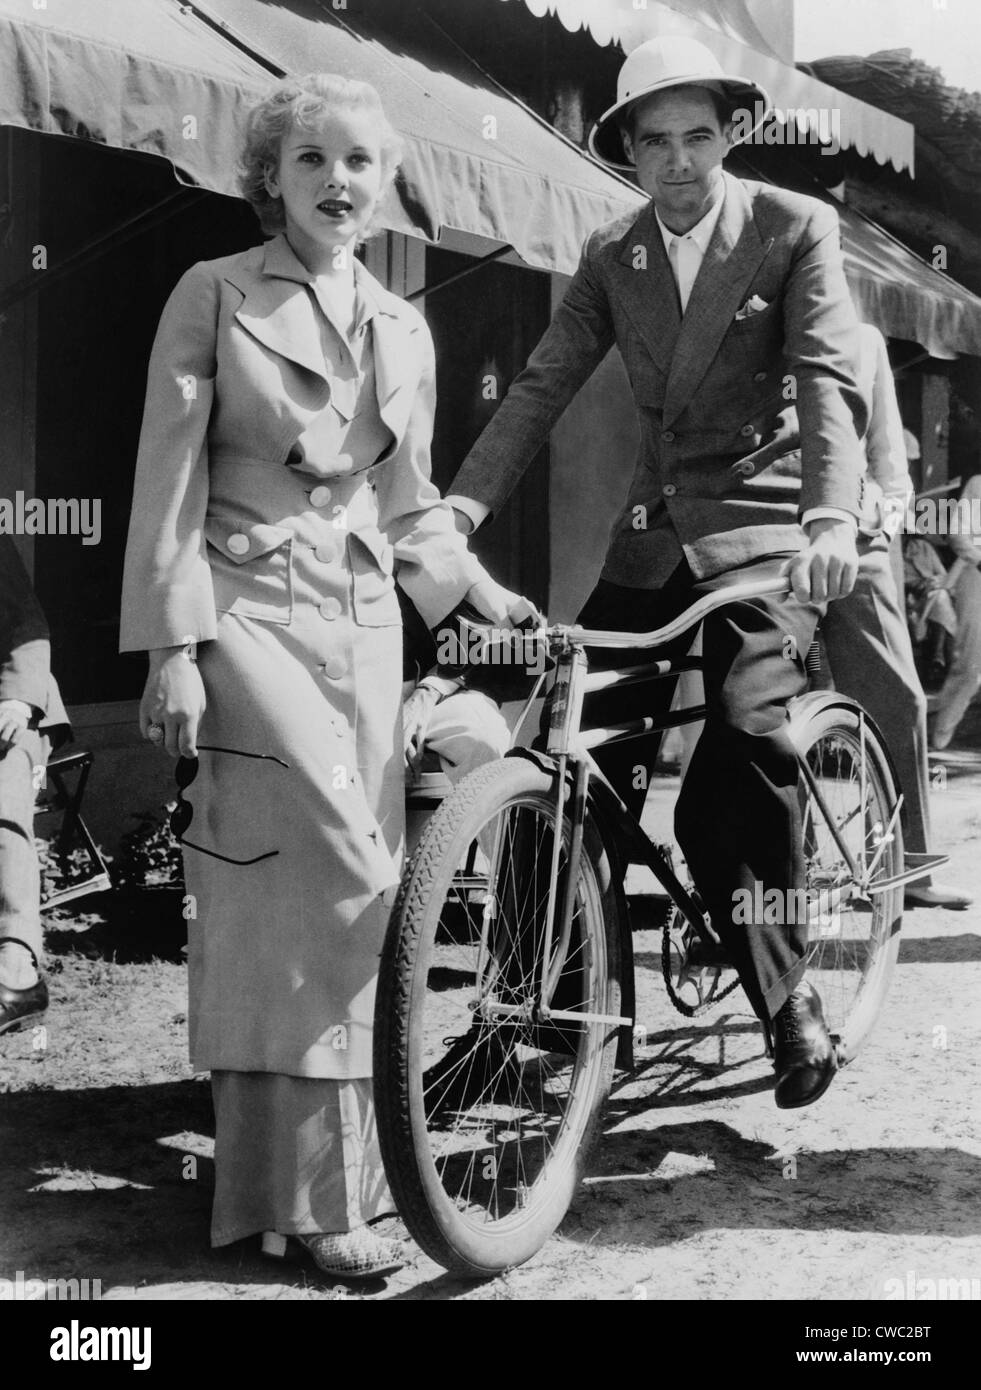 Howard Hughes 1905-1976 with actress Ida Lupino 1918-1995 in Miami Florida 1937. LC-USZ62-120724 Stock Photo